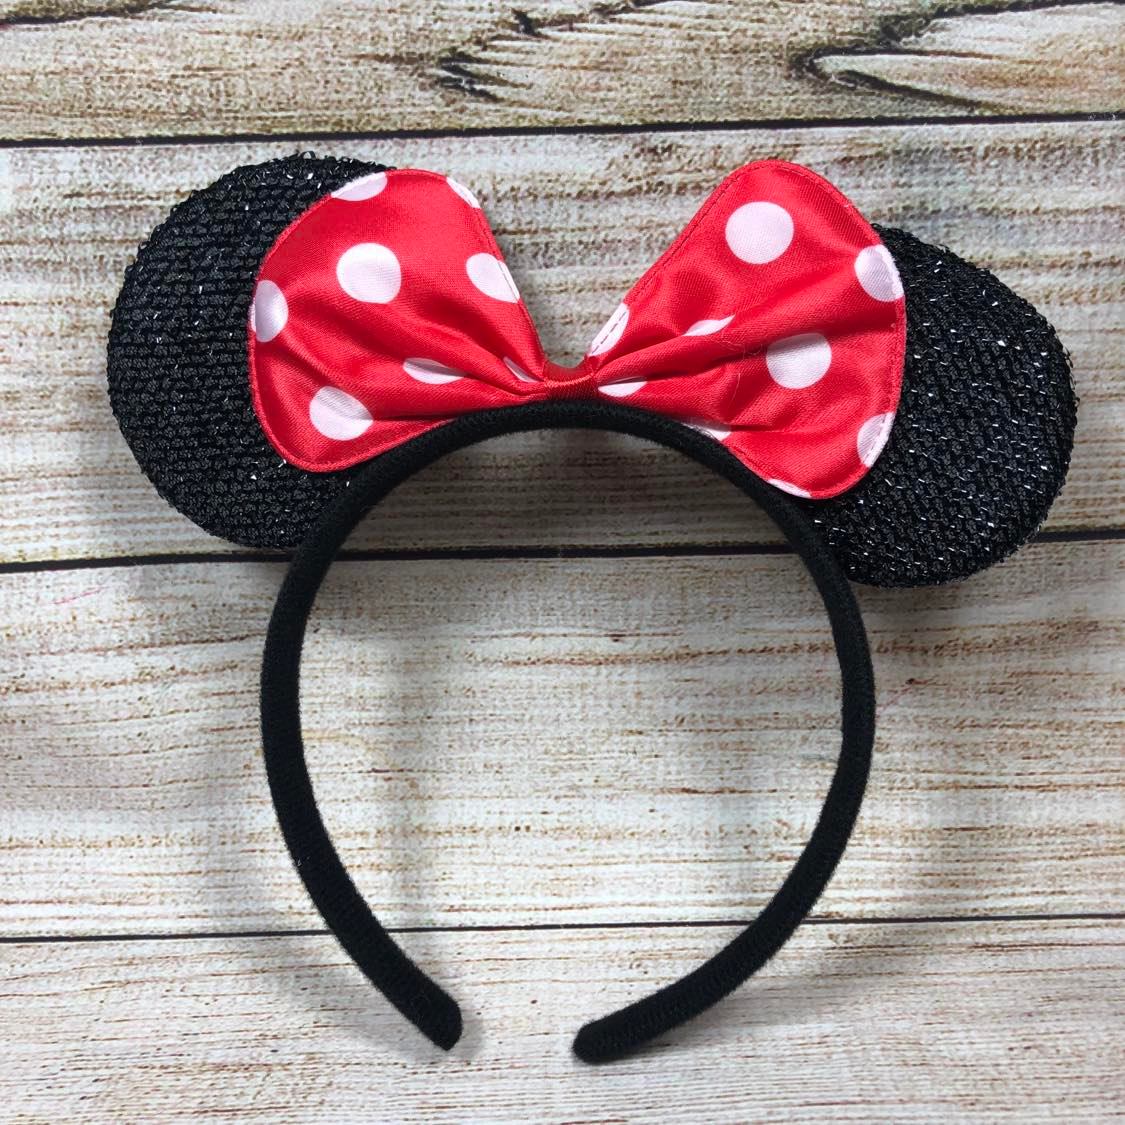 Disney Ears Headband - Classic Minnie Mouse - Polka Dot